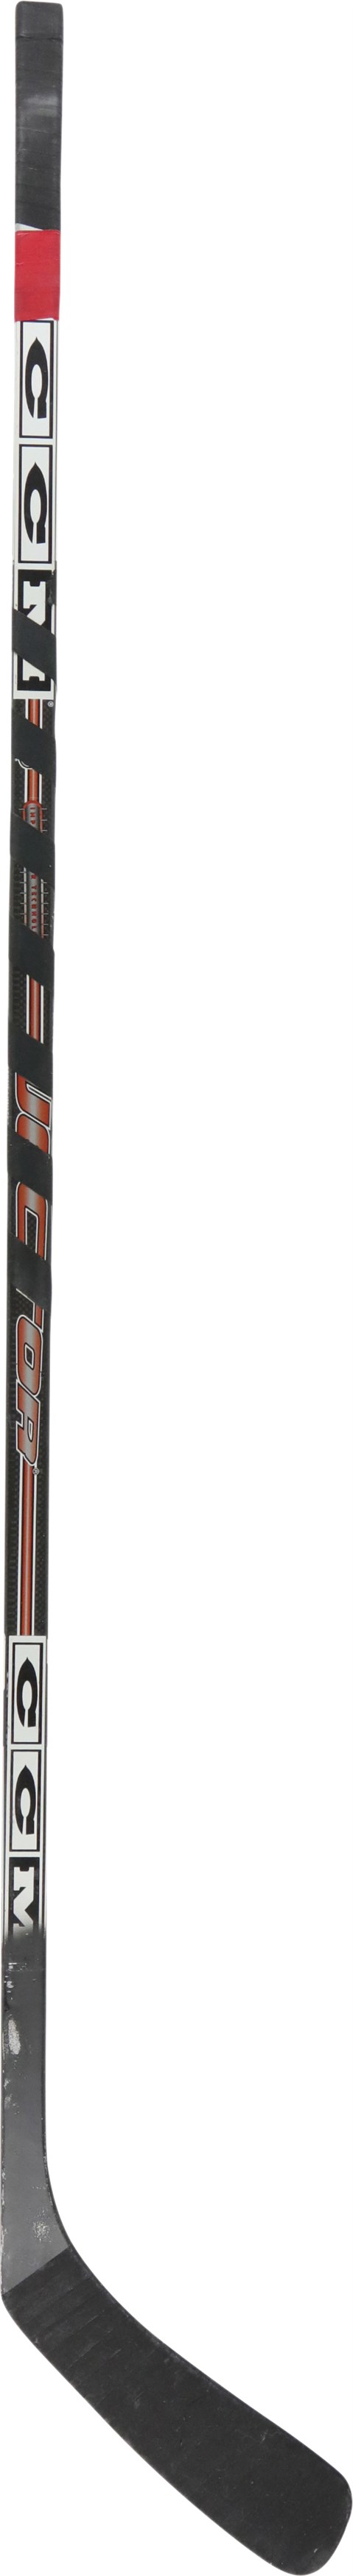 Hockey - 2005-06 Jaromir Jagr New York Rangers Game Used Stick (Madison Square Garden LOA)